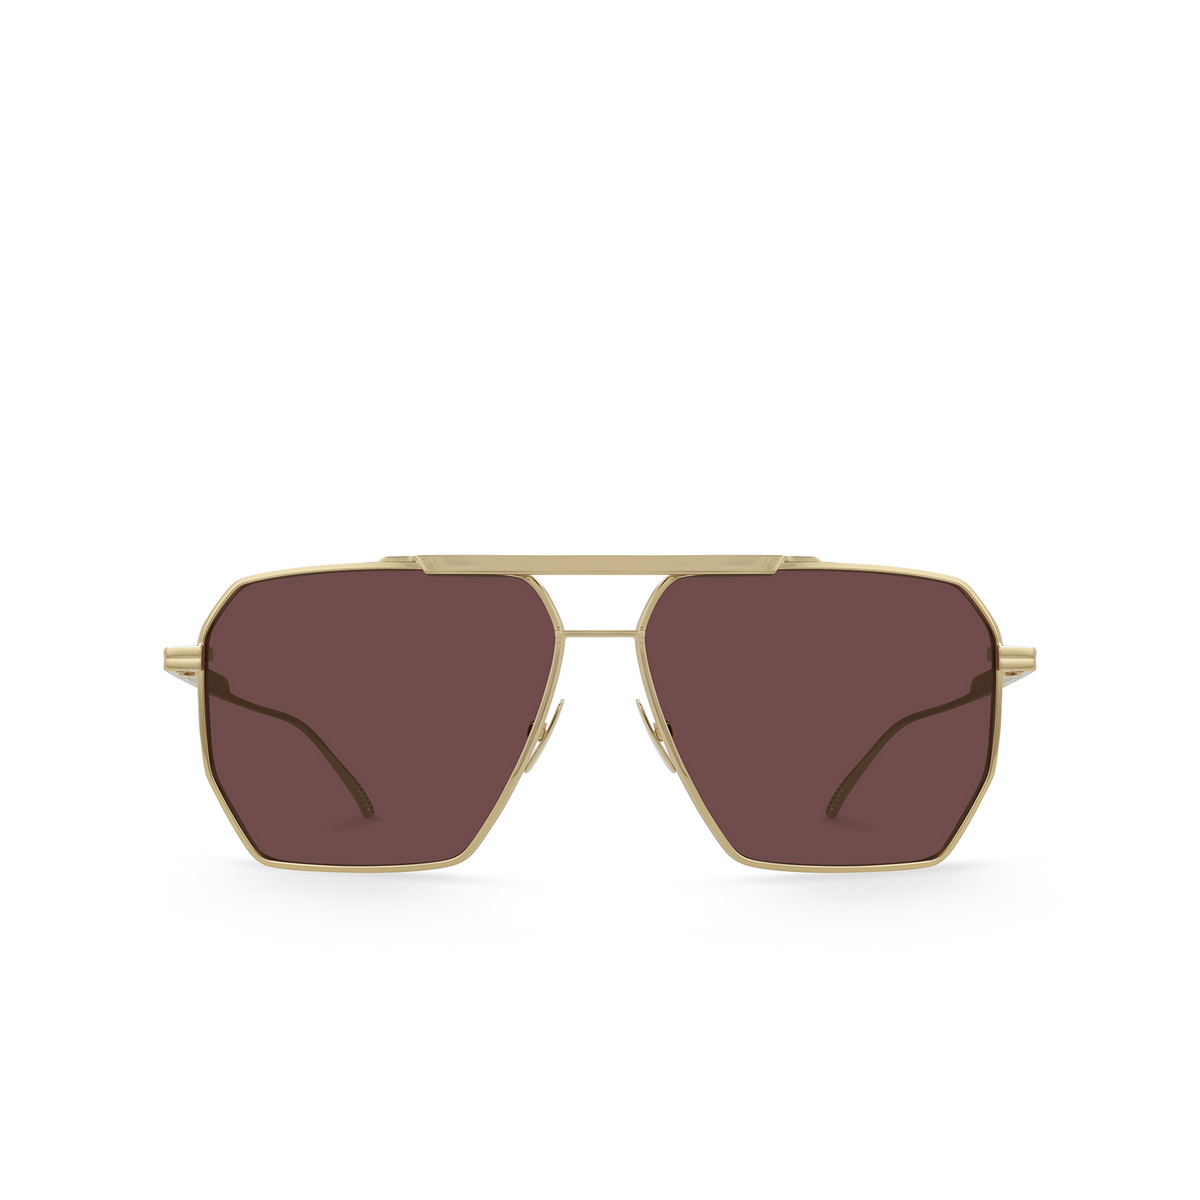 Bottega Veneta® Irregular Sunglasses: BV1012S color Gold 005 - front view.